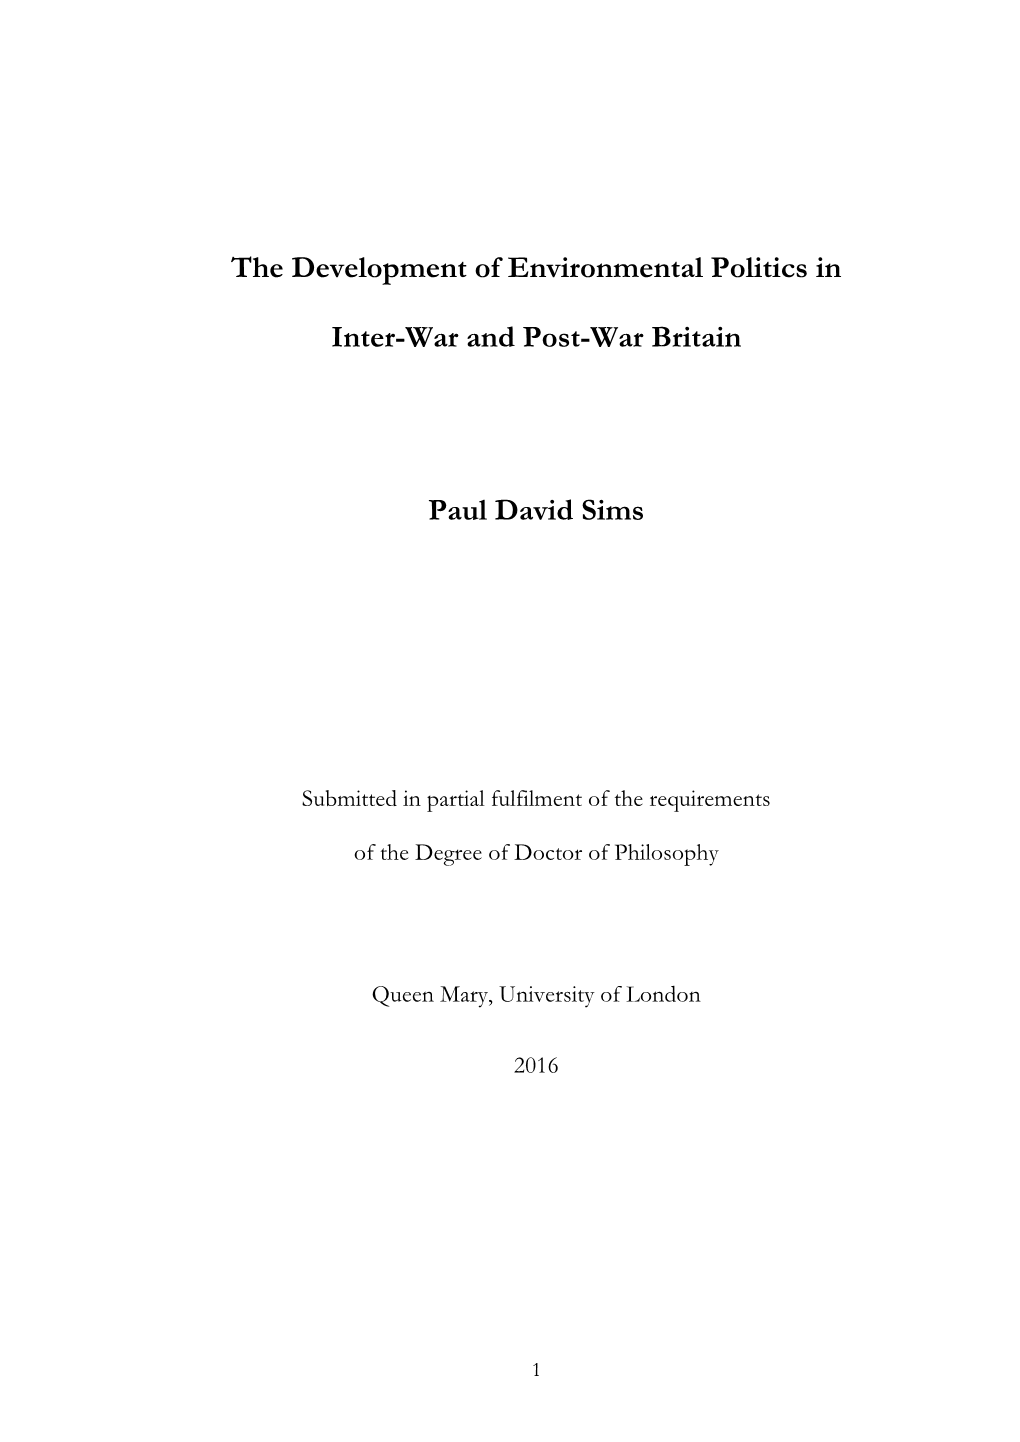 The Development of Environmental Politics in Inter-War and Post-War